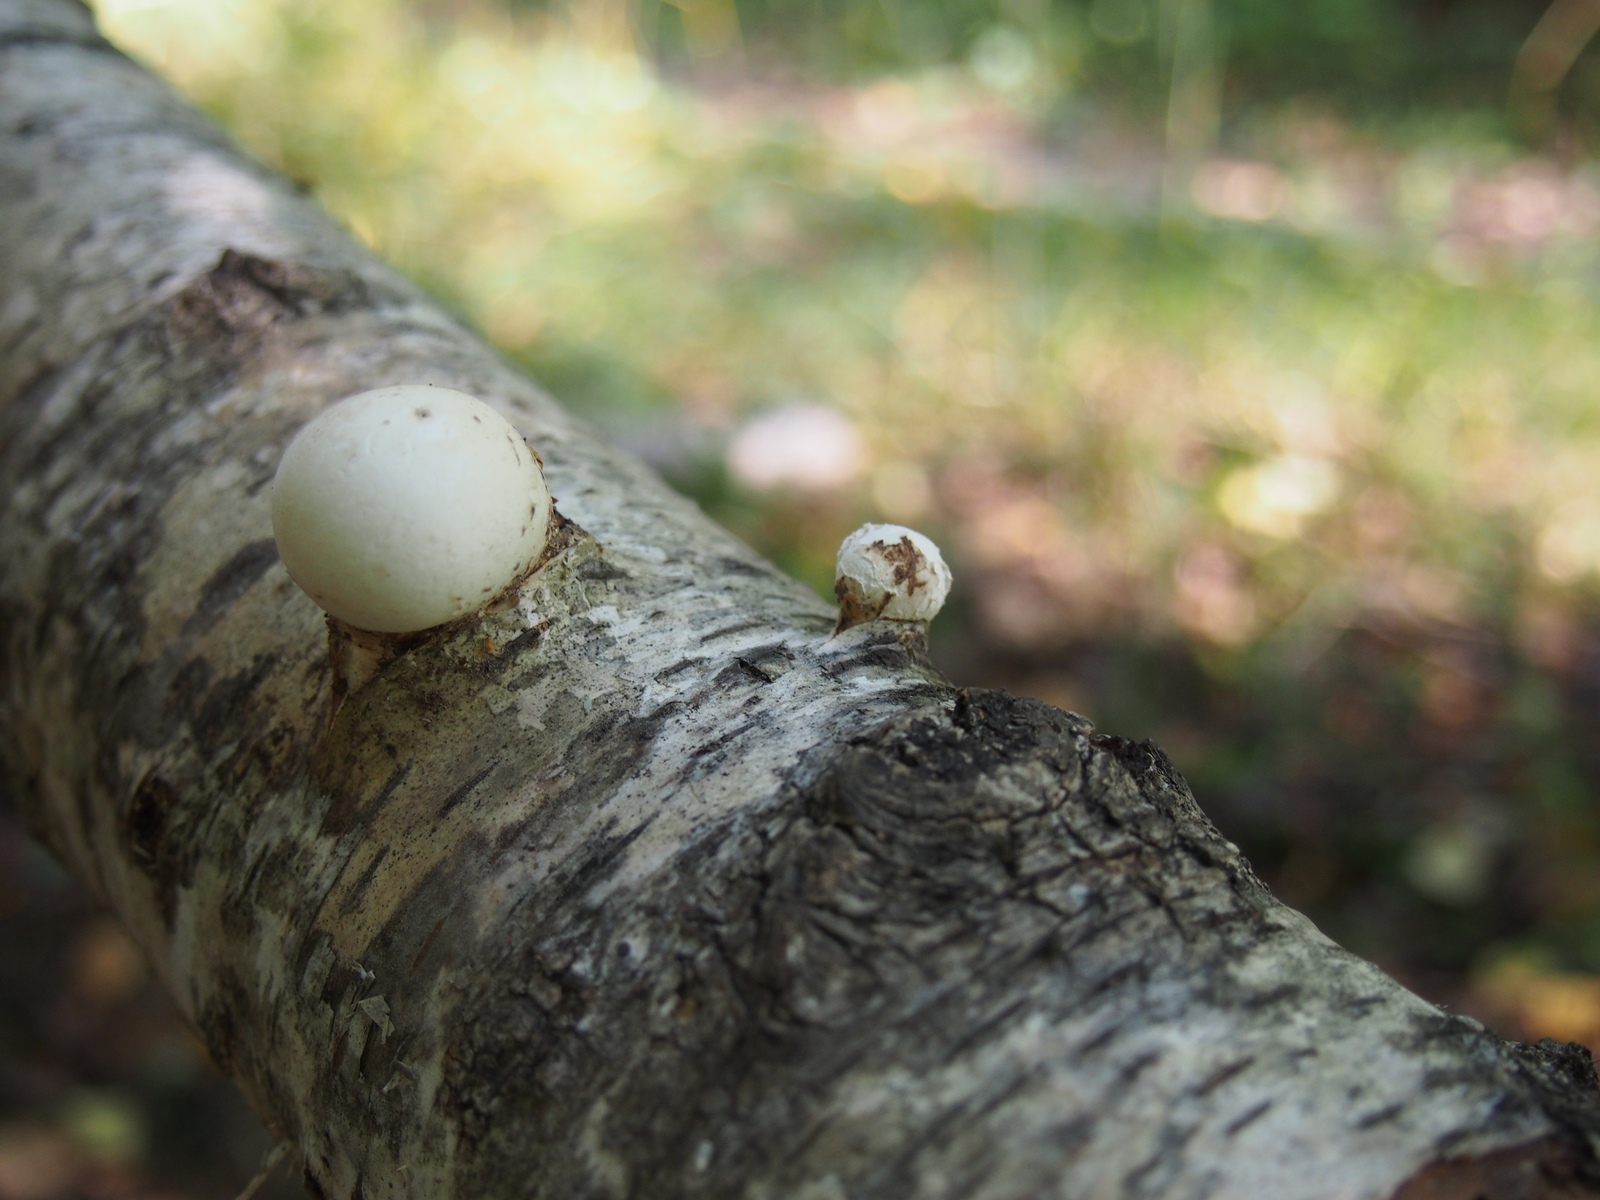 Mushrooms - My, Mushrooms, The photo, A selection, Longpost